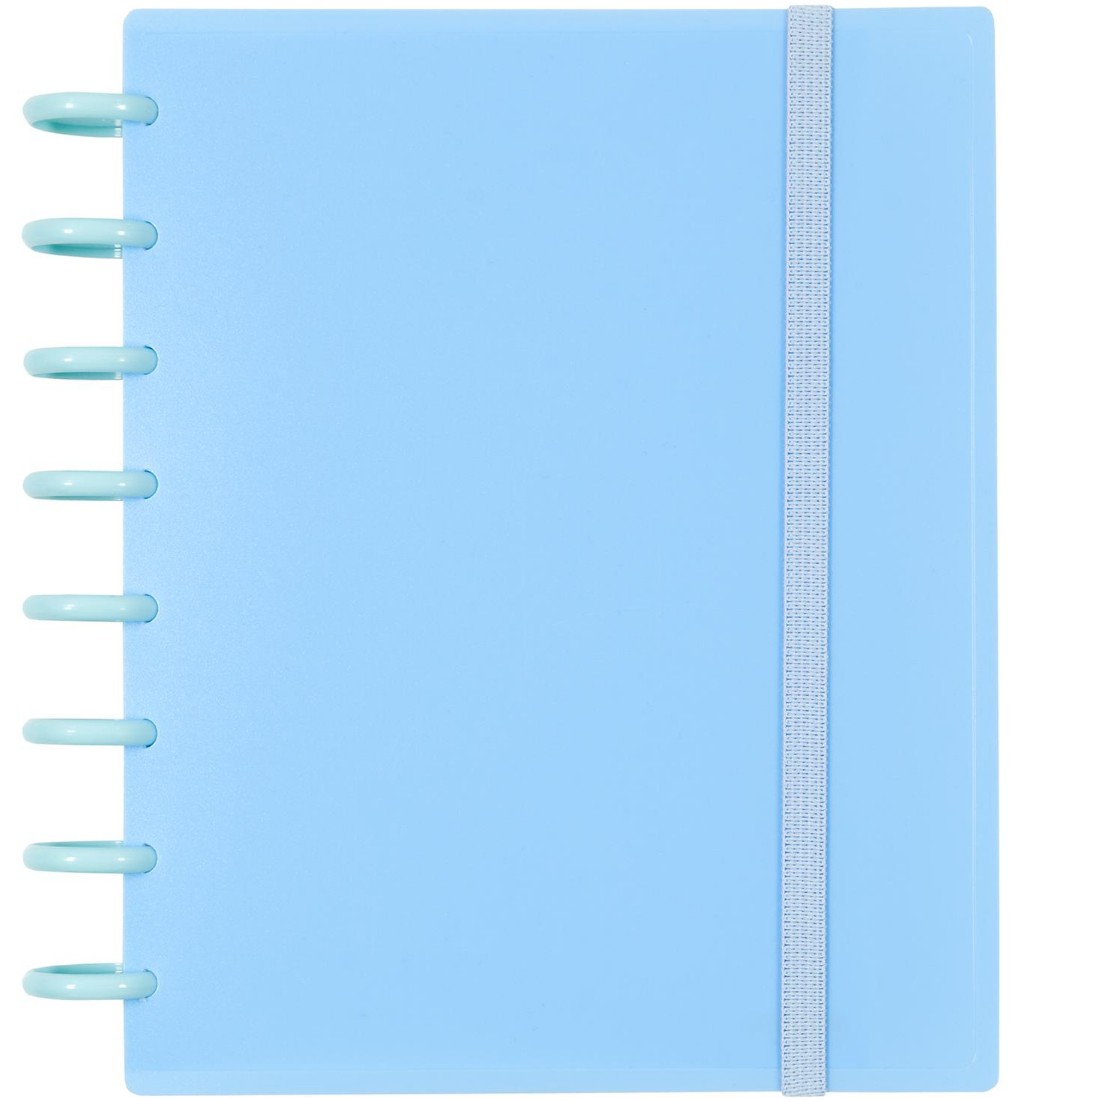 Caderno Inteligente Ingeniox Pautado A5 Azul carchivo